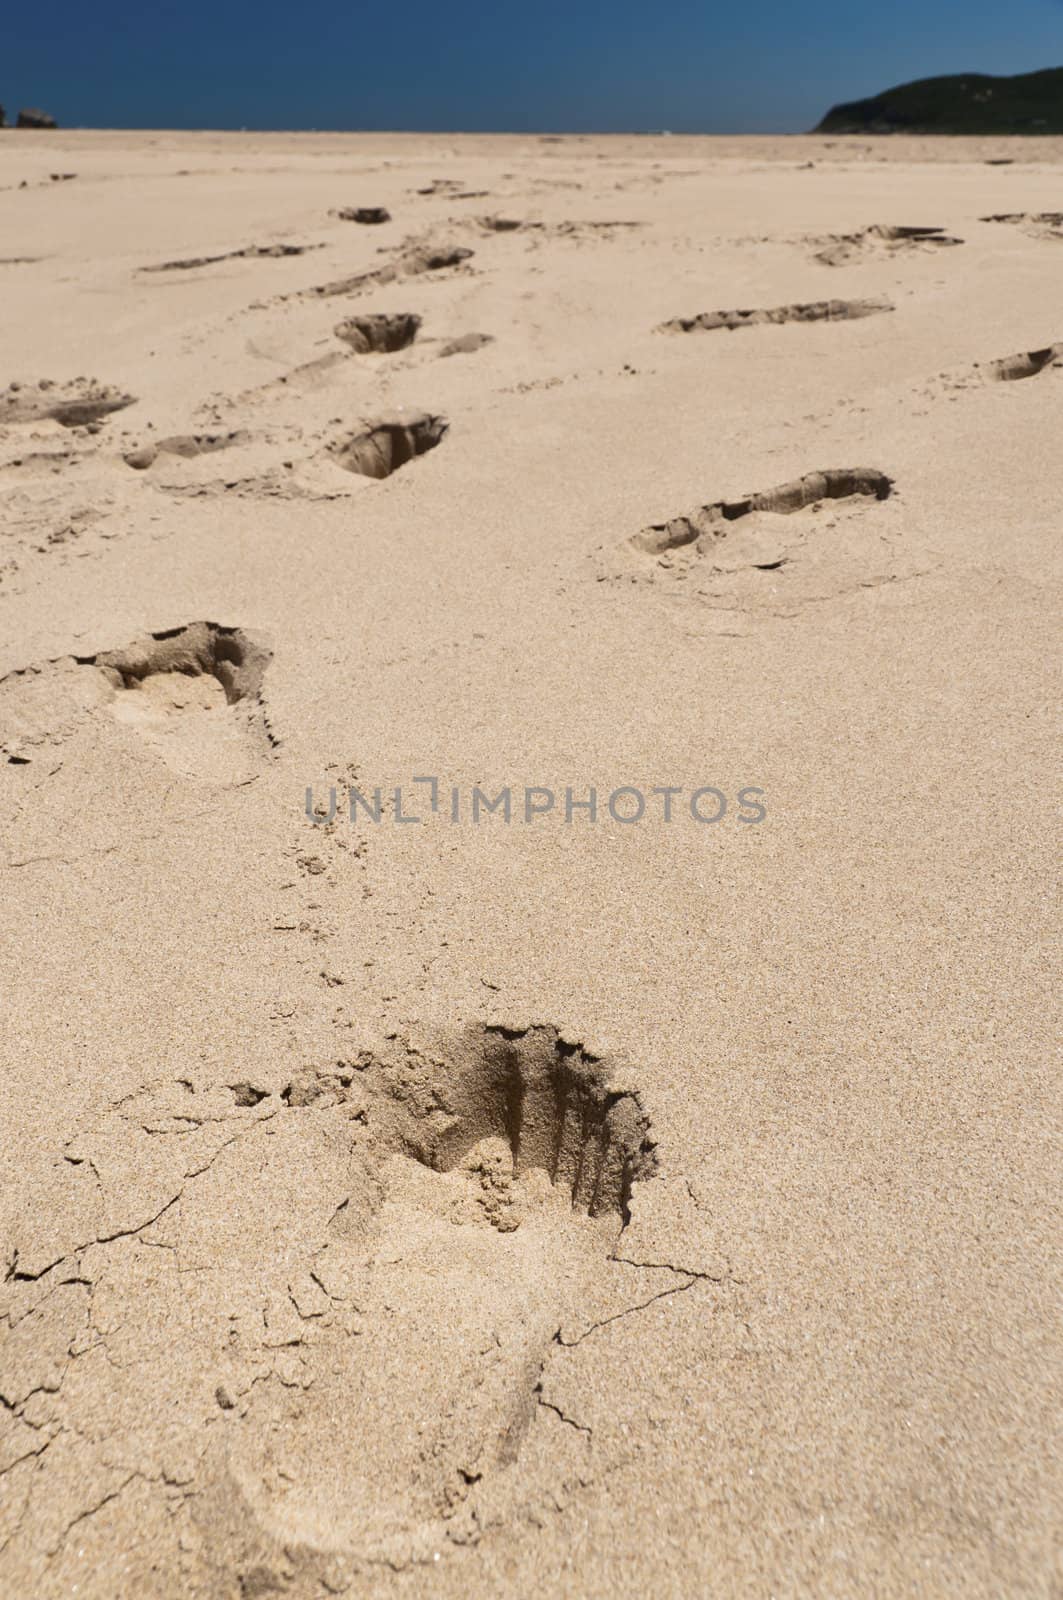 Footprints left over the sandy dunes on a beach, South Africa